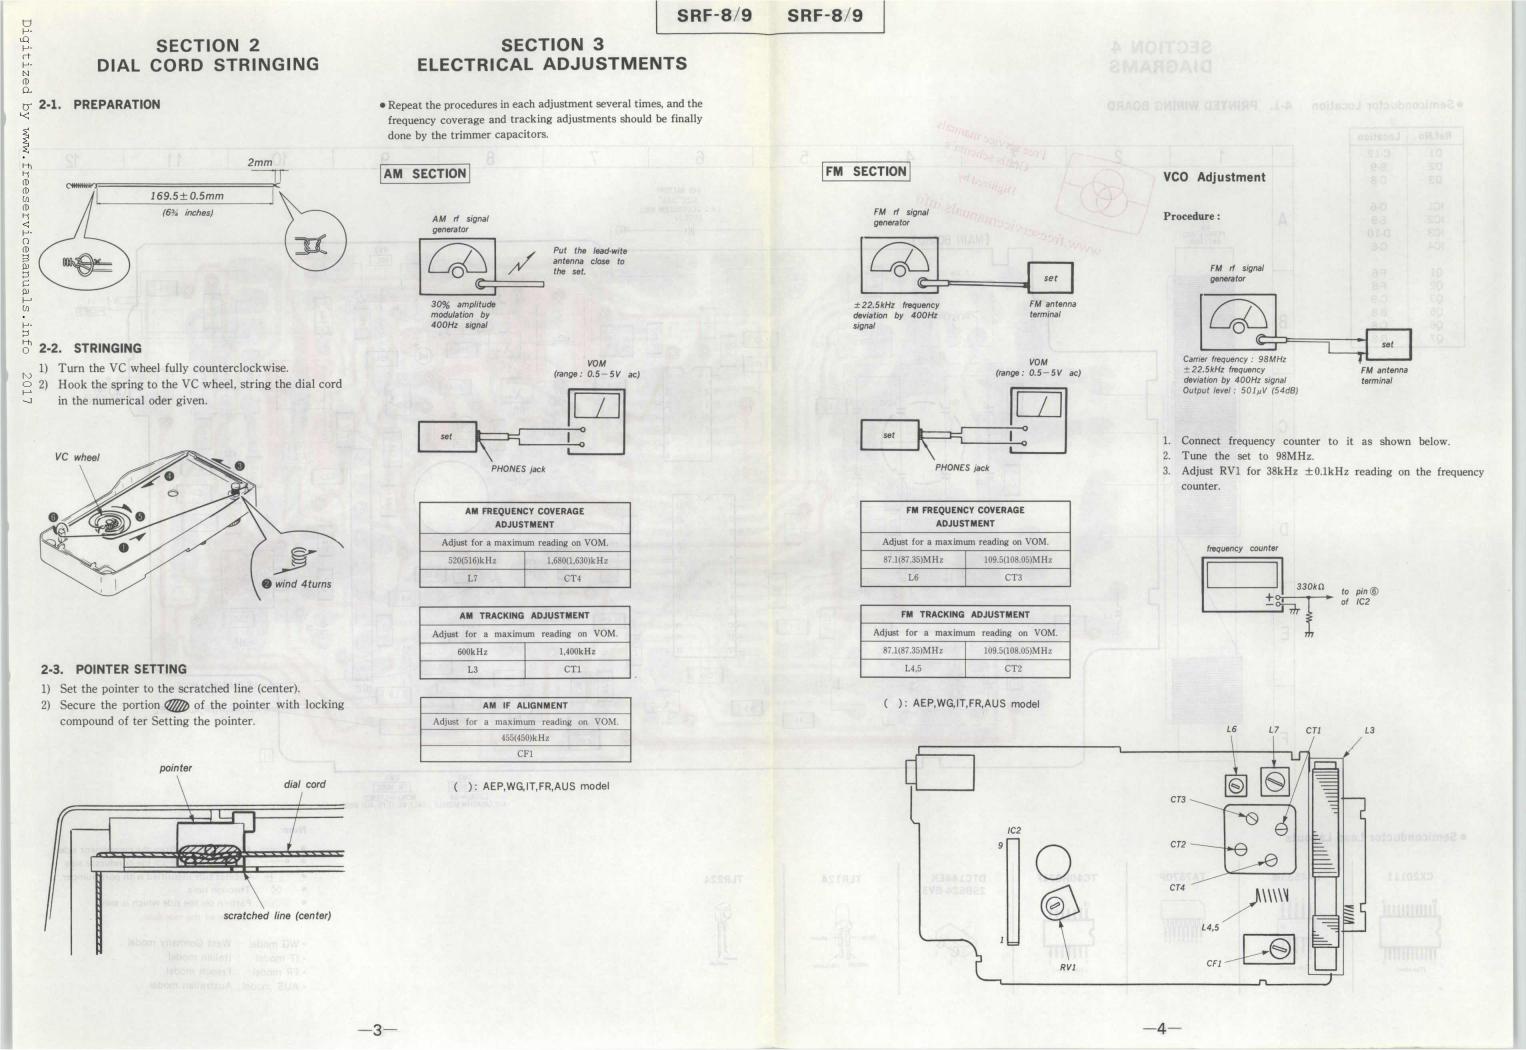 Sony srf-8, srf-9 User Manual